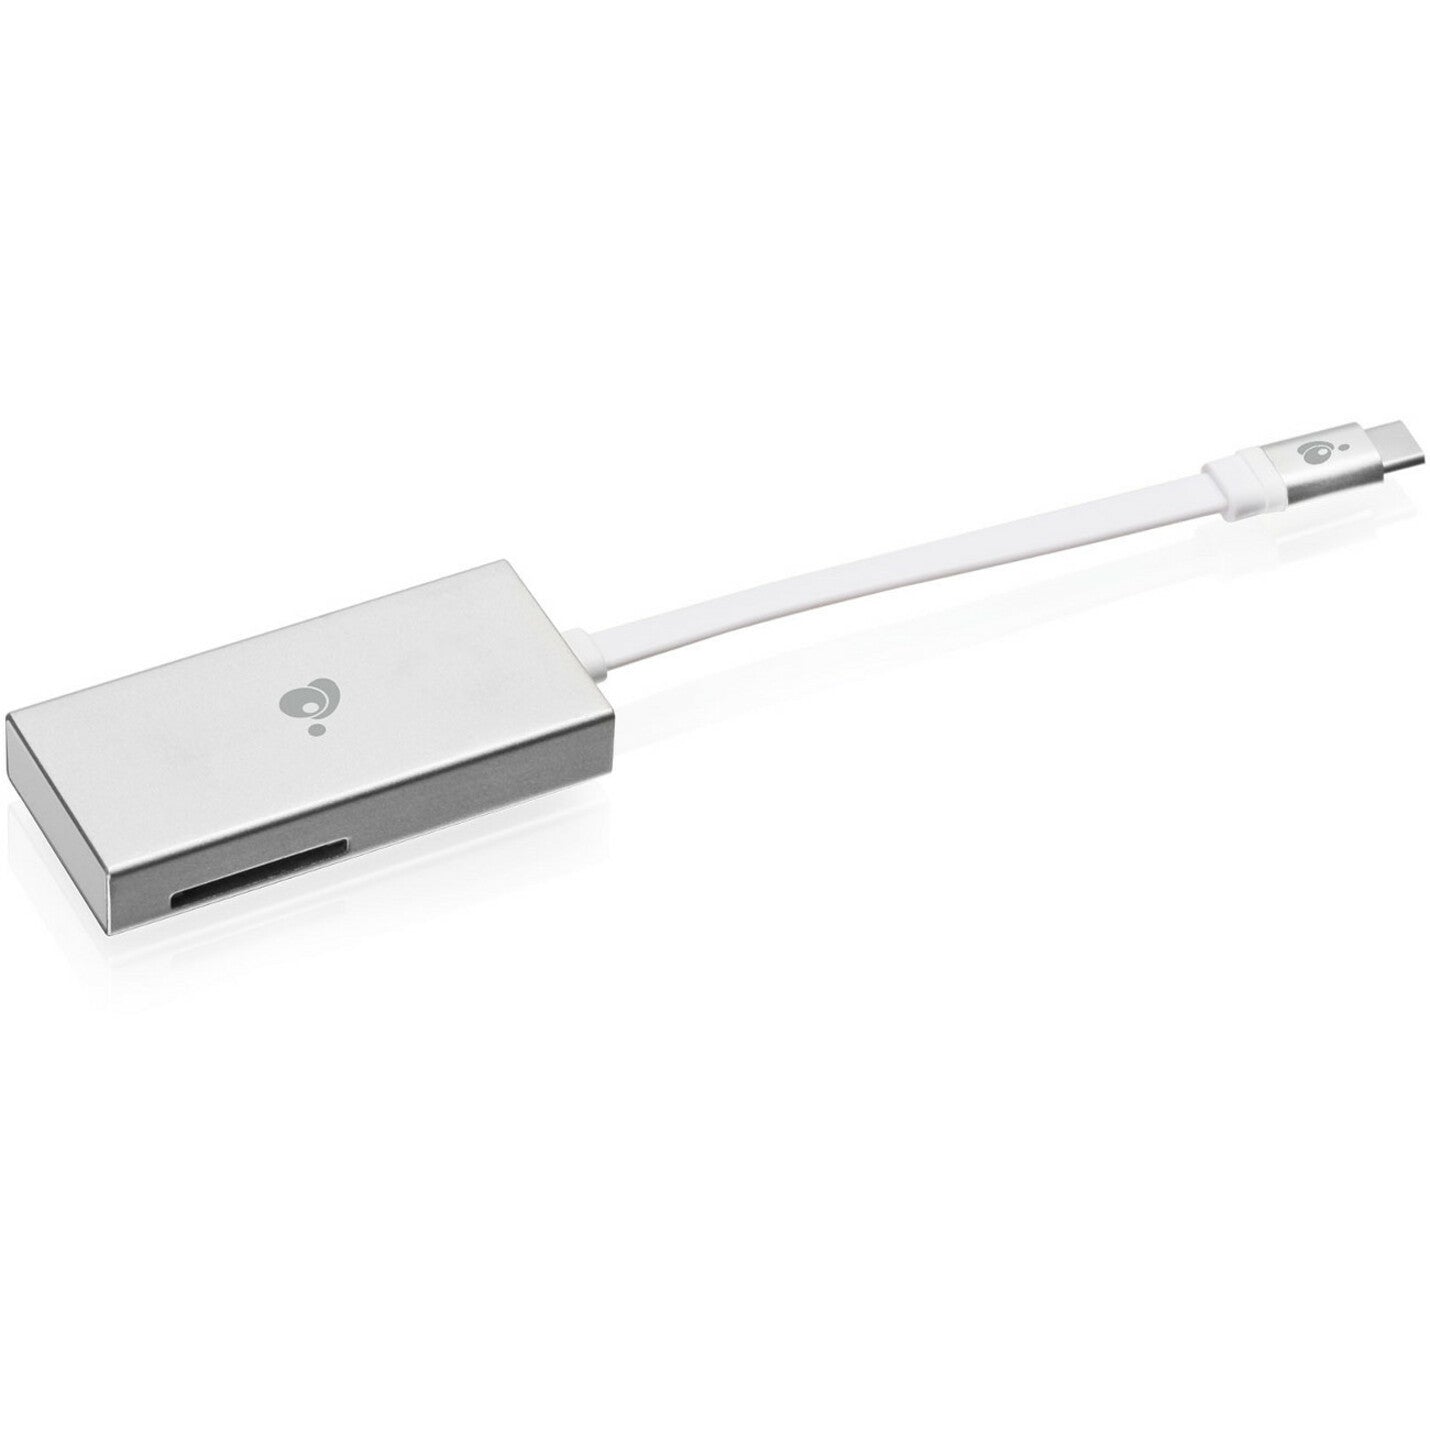 IOGEAR USB-C 3 In 1 Card Reader/Writer - CF, MicroSD, UHS-II SD [Discontinued]